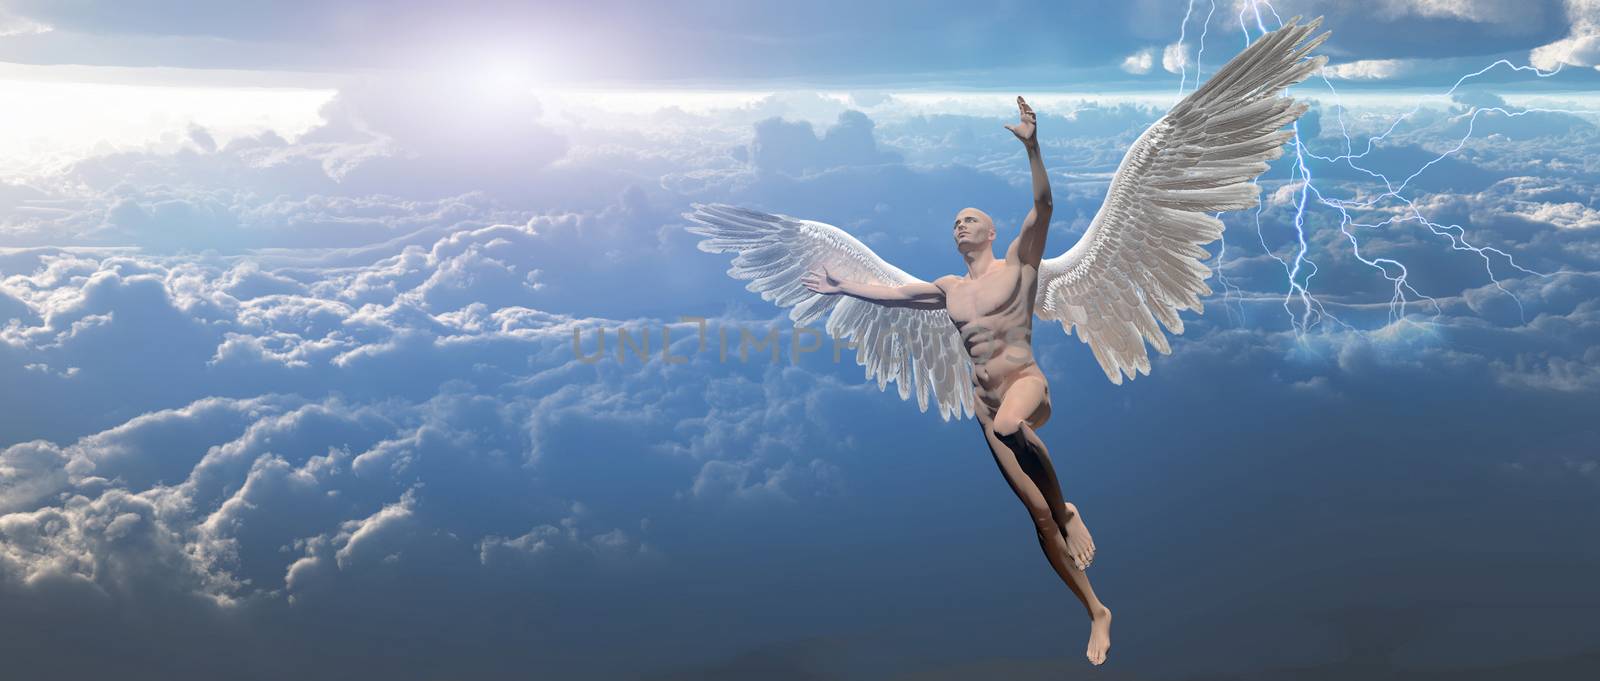 Surrealism. Man with angel's wings flies in cloudy sky.